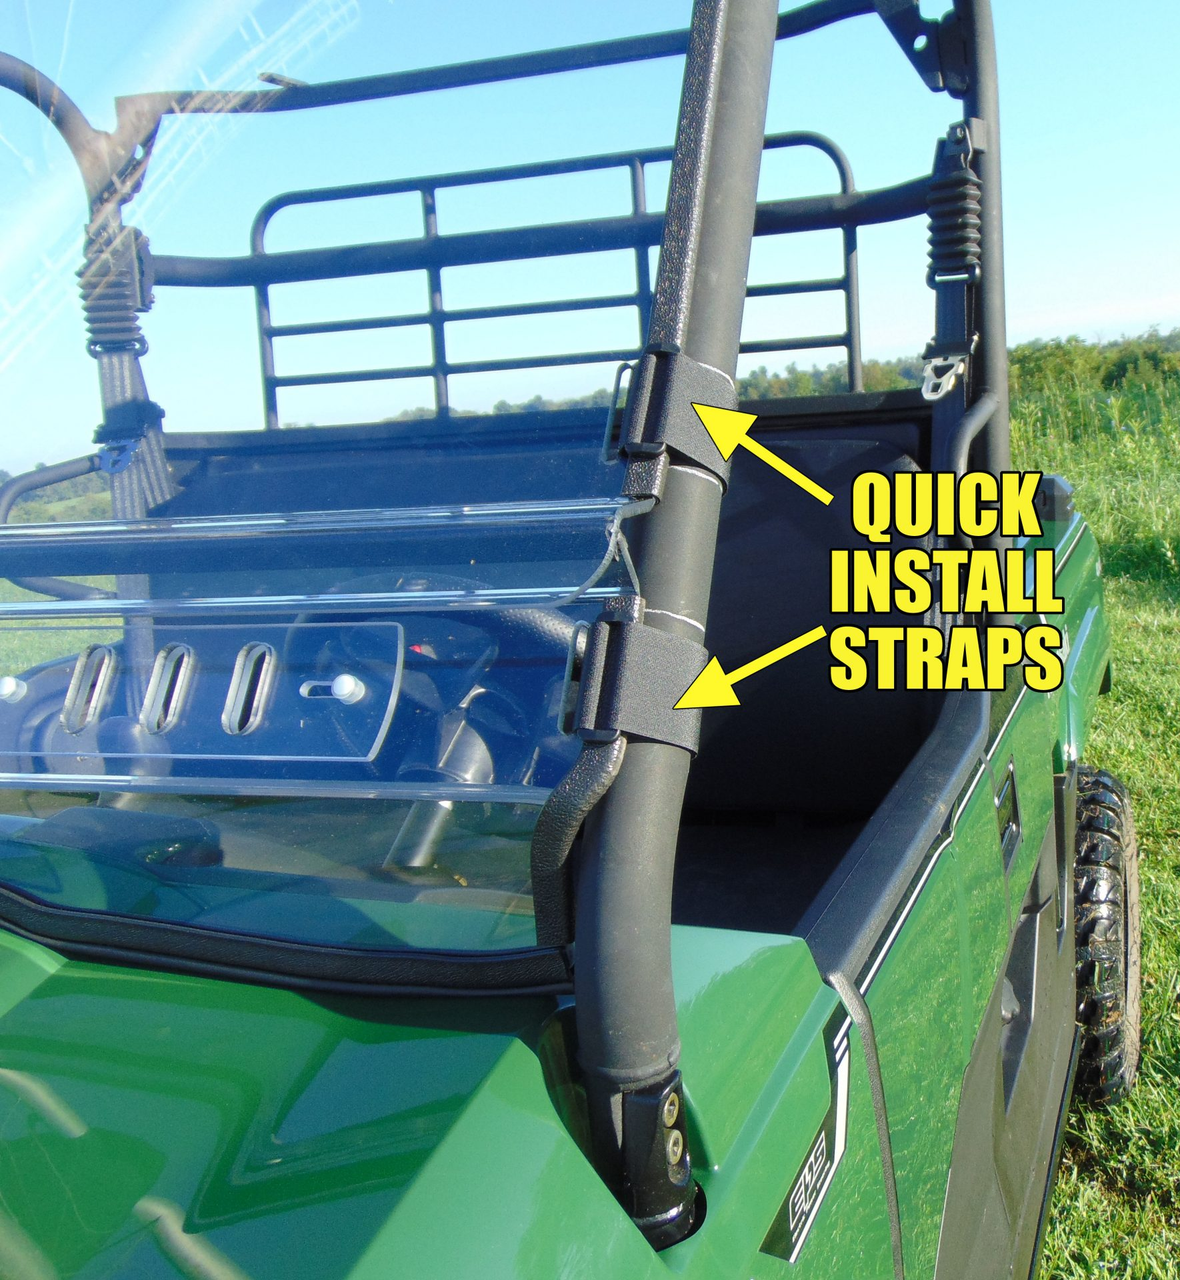 3 Star side x side Polaris RZR 570/800/900 windshield quick install straps